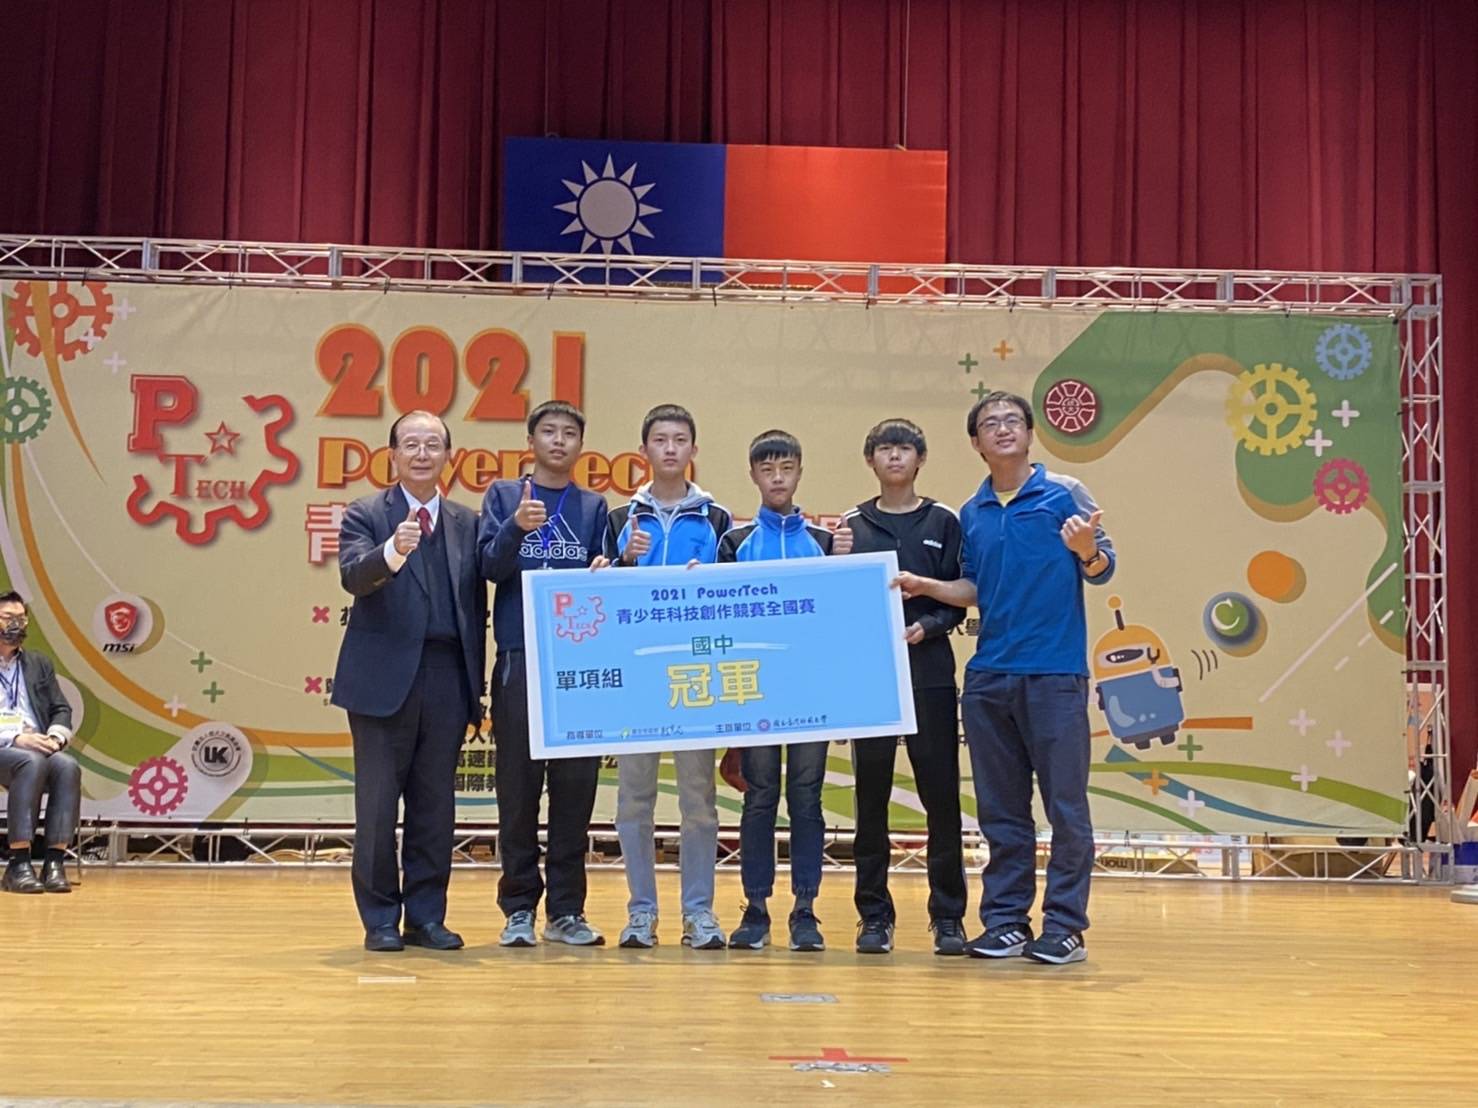 2021 PowerTech青少年科技創作競賽　嘉義縣立永慶高中學生獲國中組冠軍